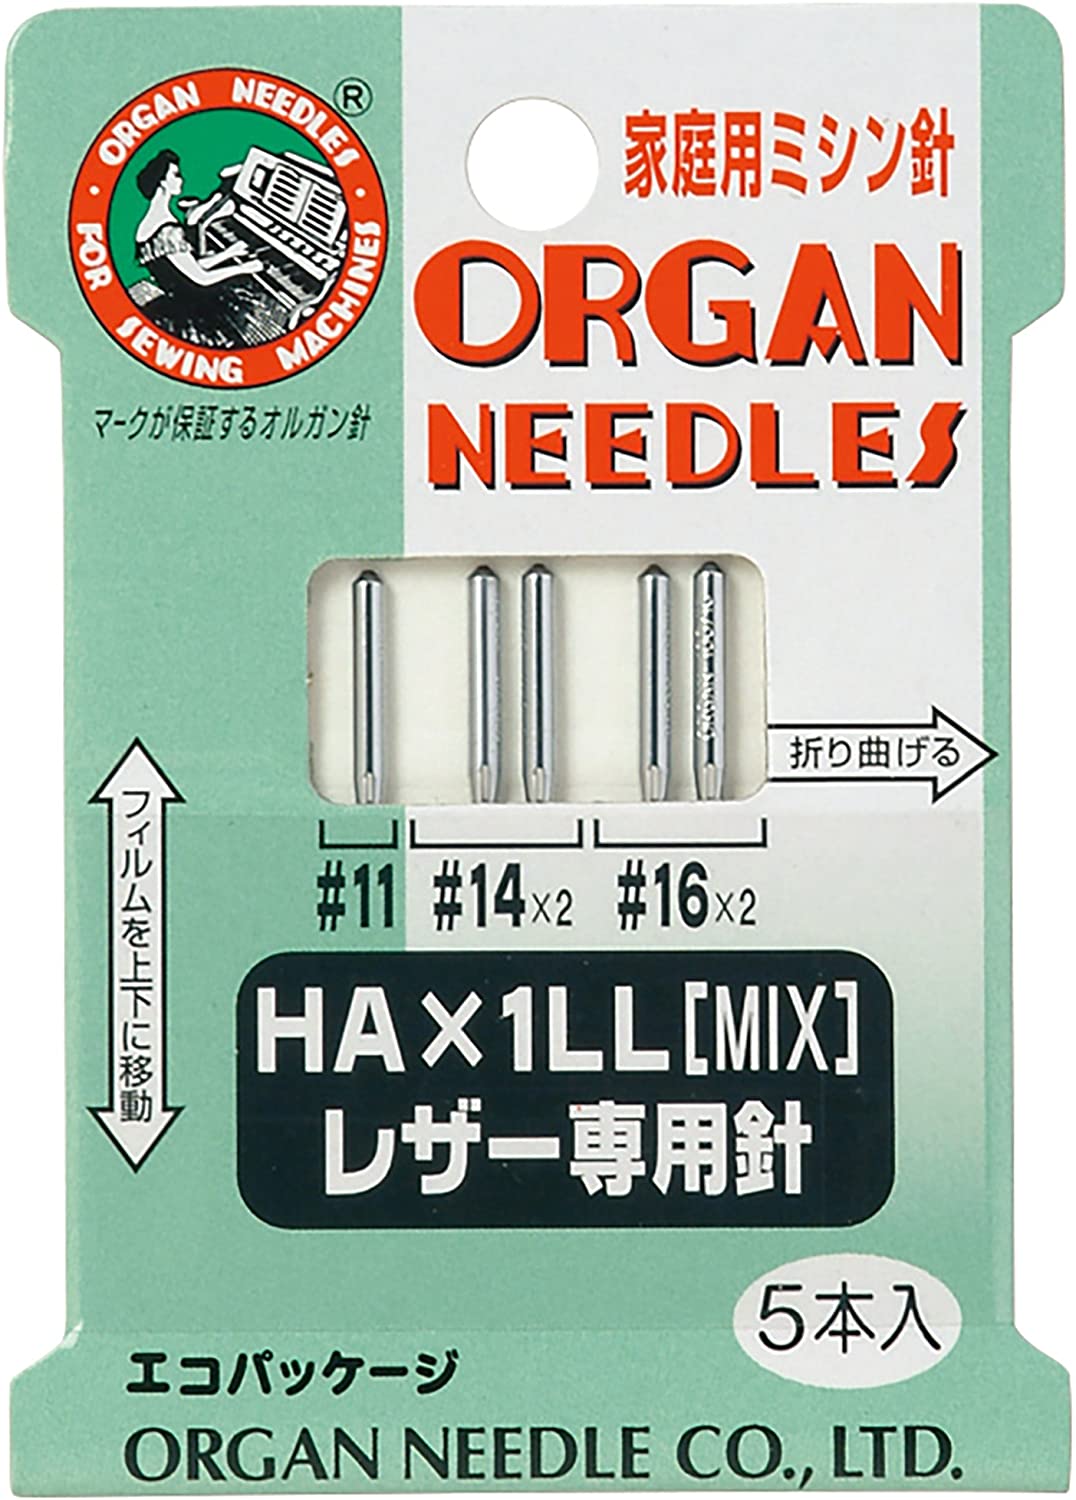 Leather Needles HA x 1LL, 5pcs (pcs)